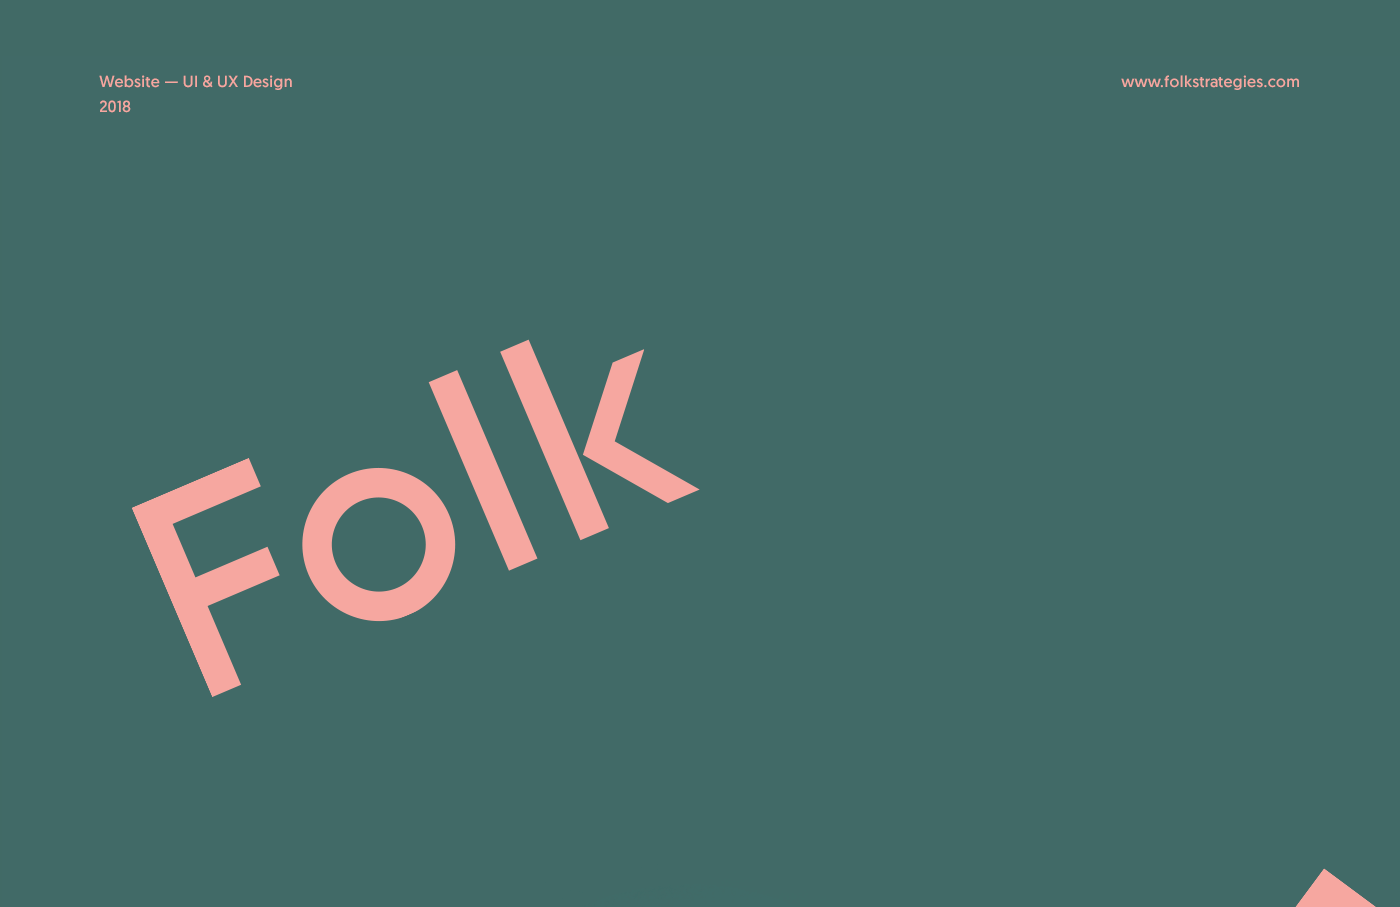 Homepages design idea #314: Folk Strategies - Website